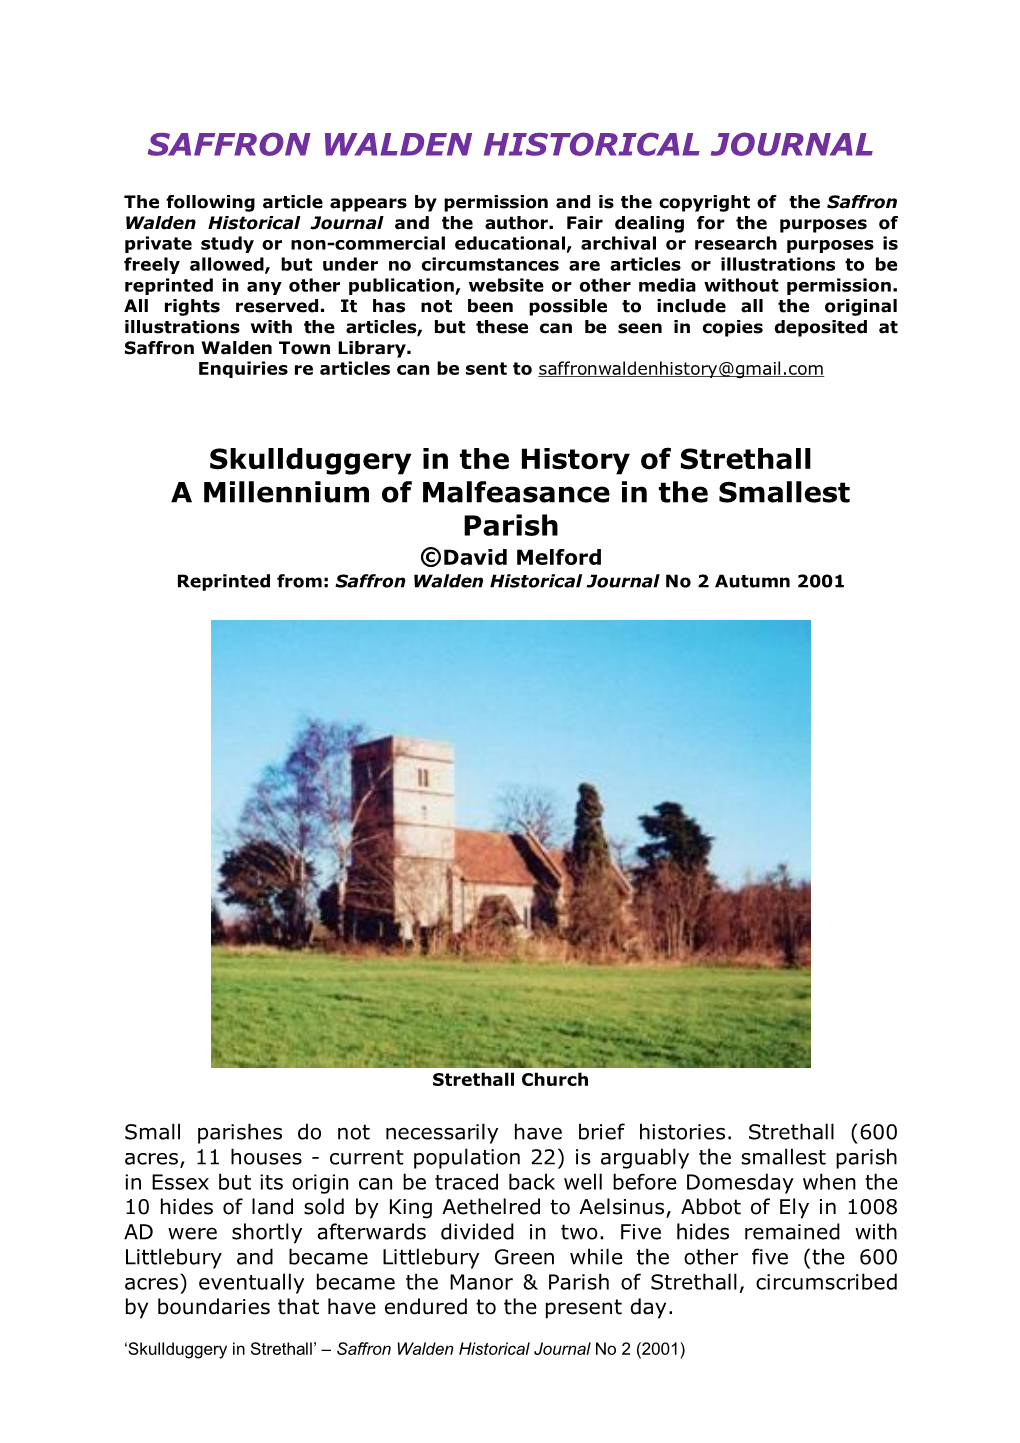 Skullduggery in Strethall’ – Saffron Walden Historical Journal No 2 (2001)